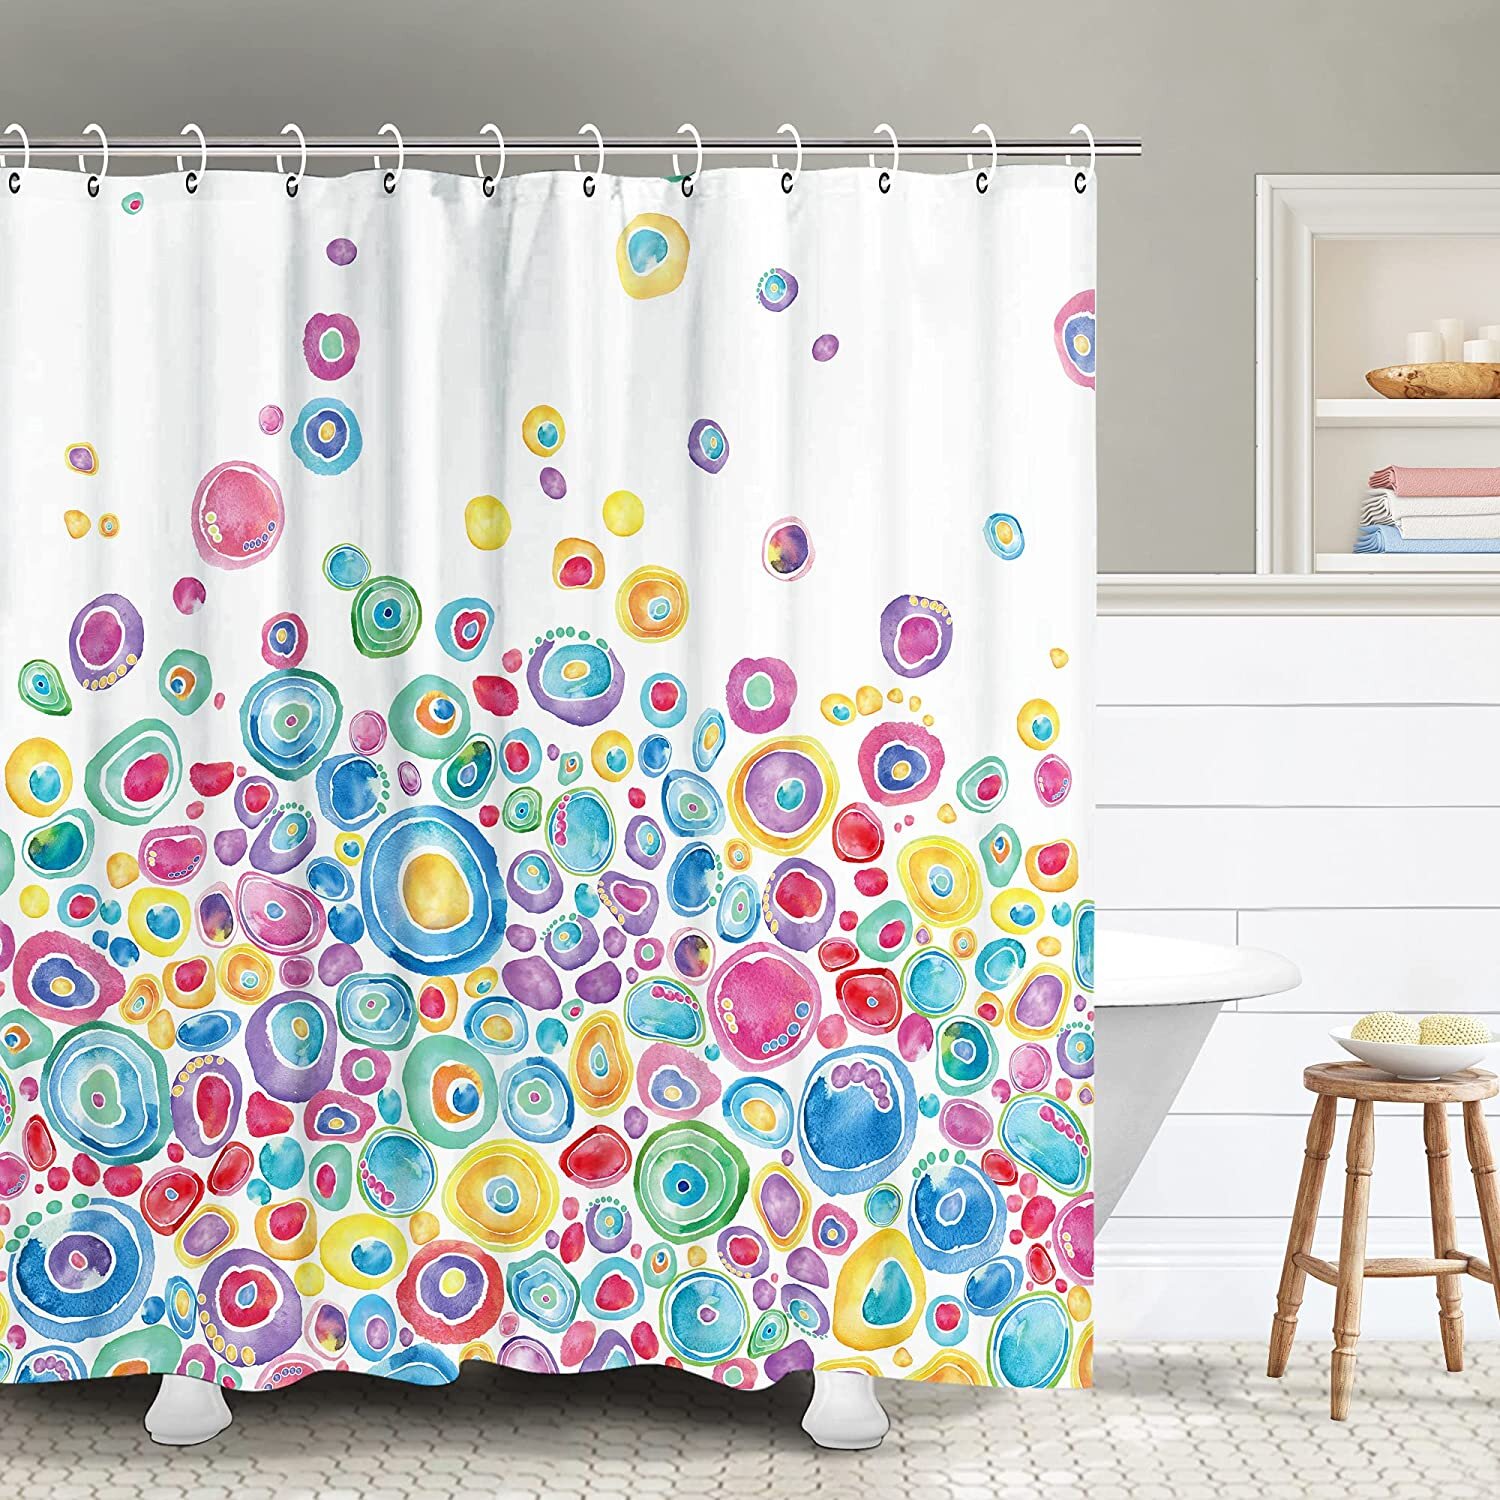 Bathroom Waterproof Polyester Persian Floral Pattern Shower Curtain Hooks Mat 